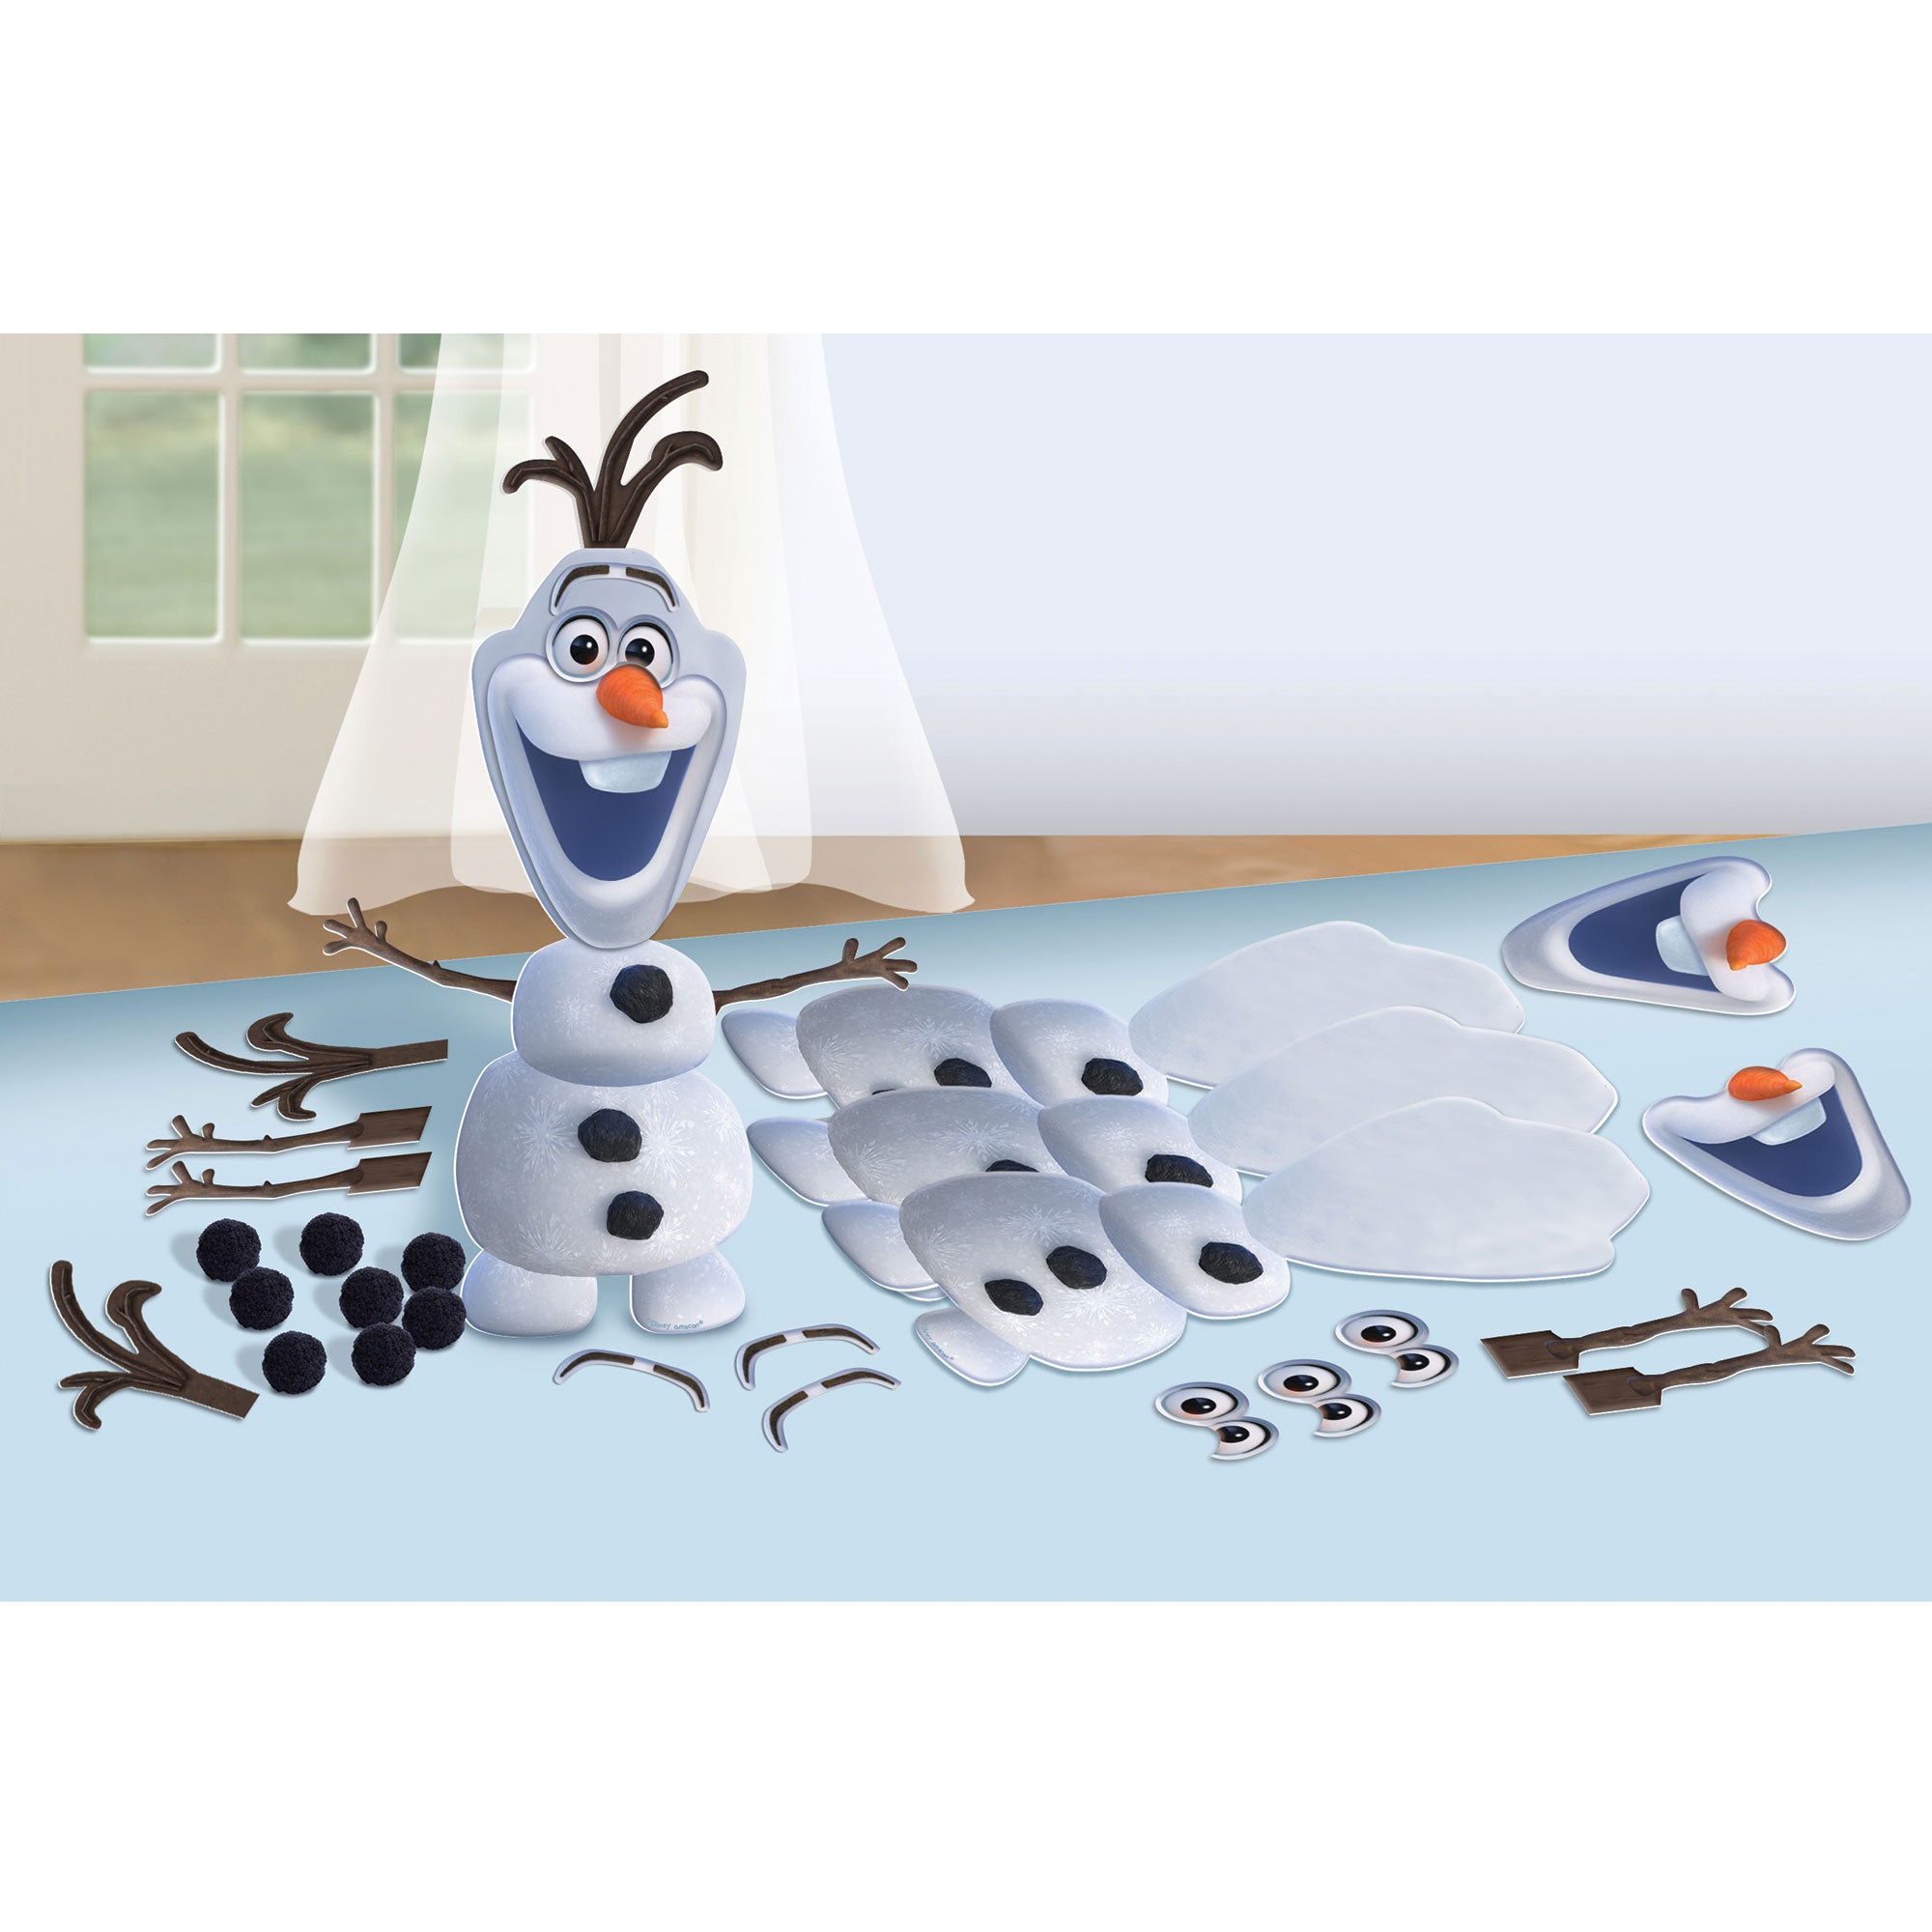 Frozen 2 Olaf Craft Decorating Kit - 4 Pack Default Title